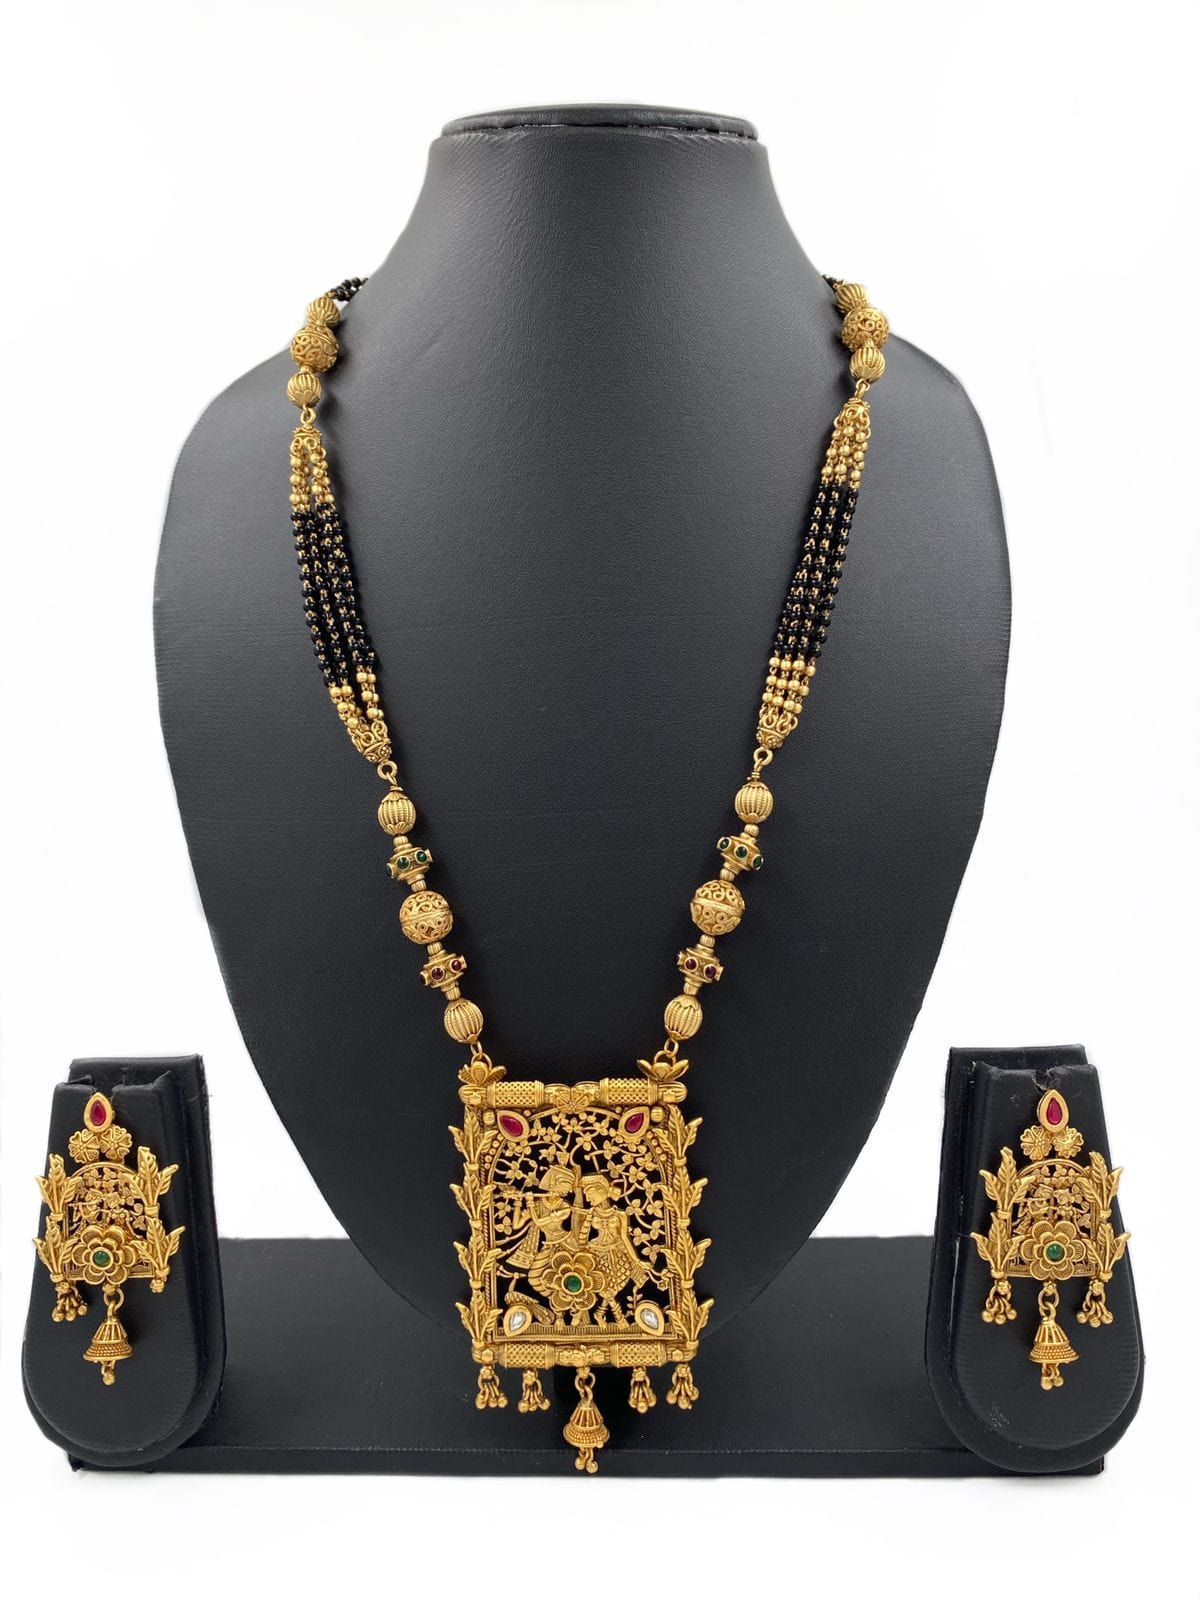 Designer Radha Krishna Long Golden Mangalsutra Necklace Set For Women By Gehna Shop Mangalsutras